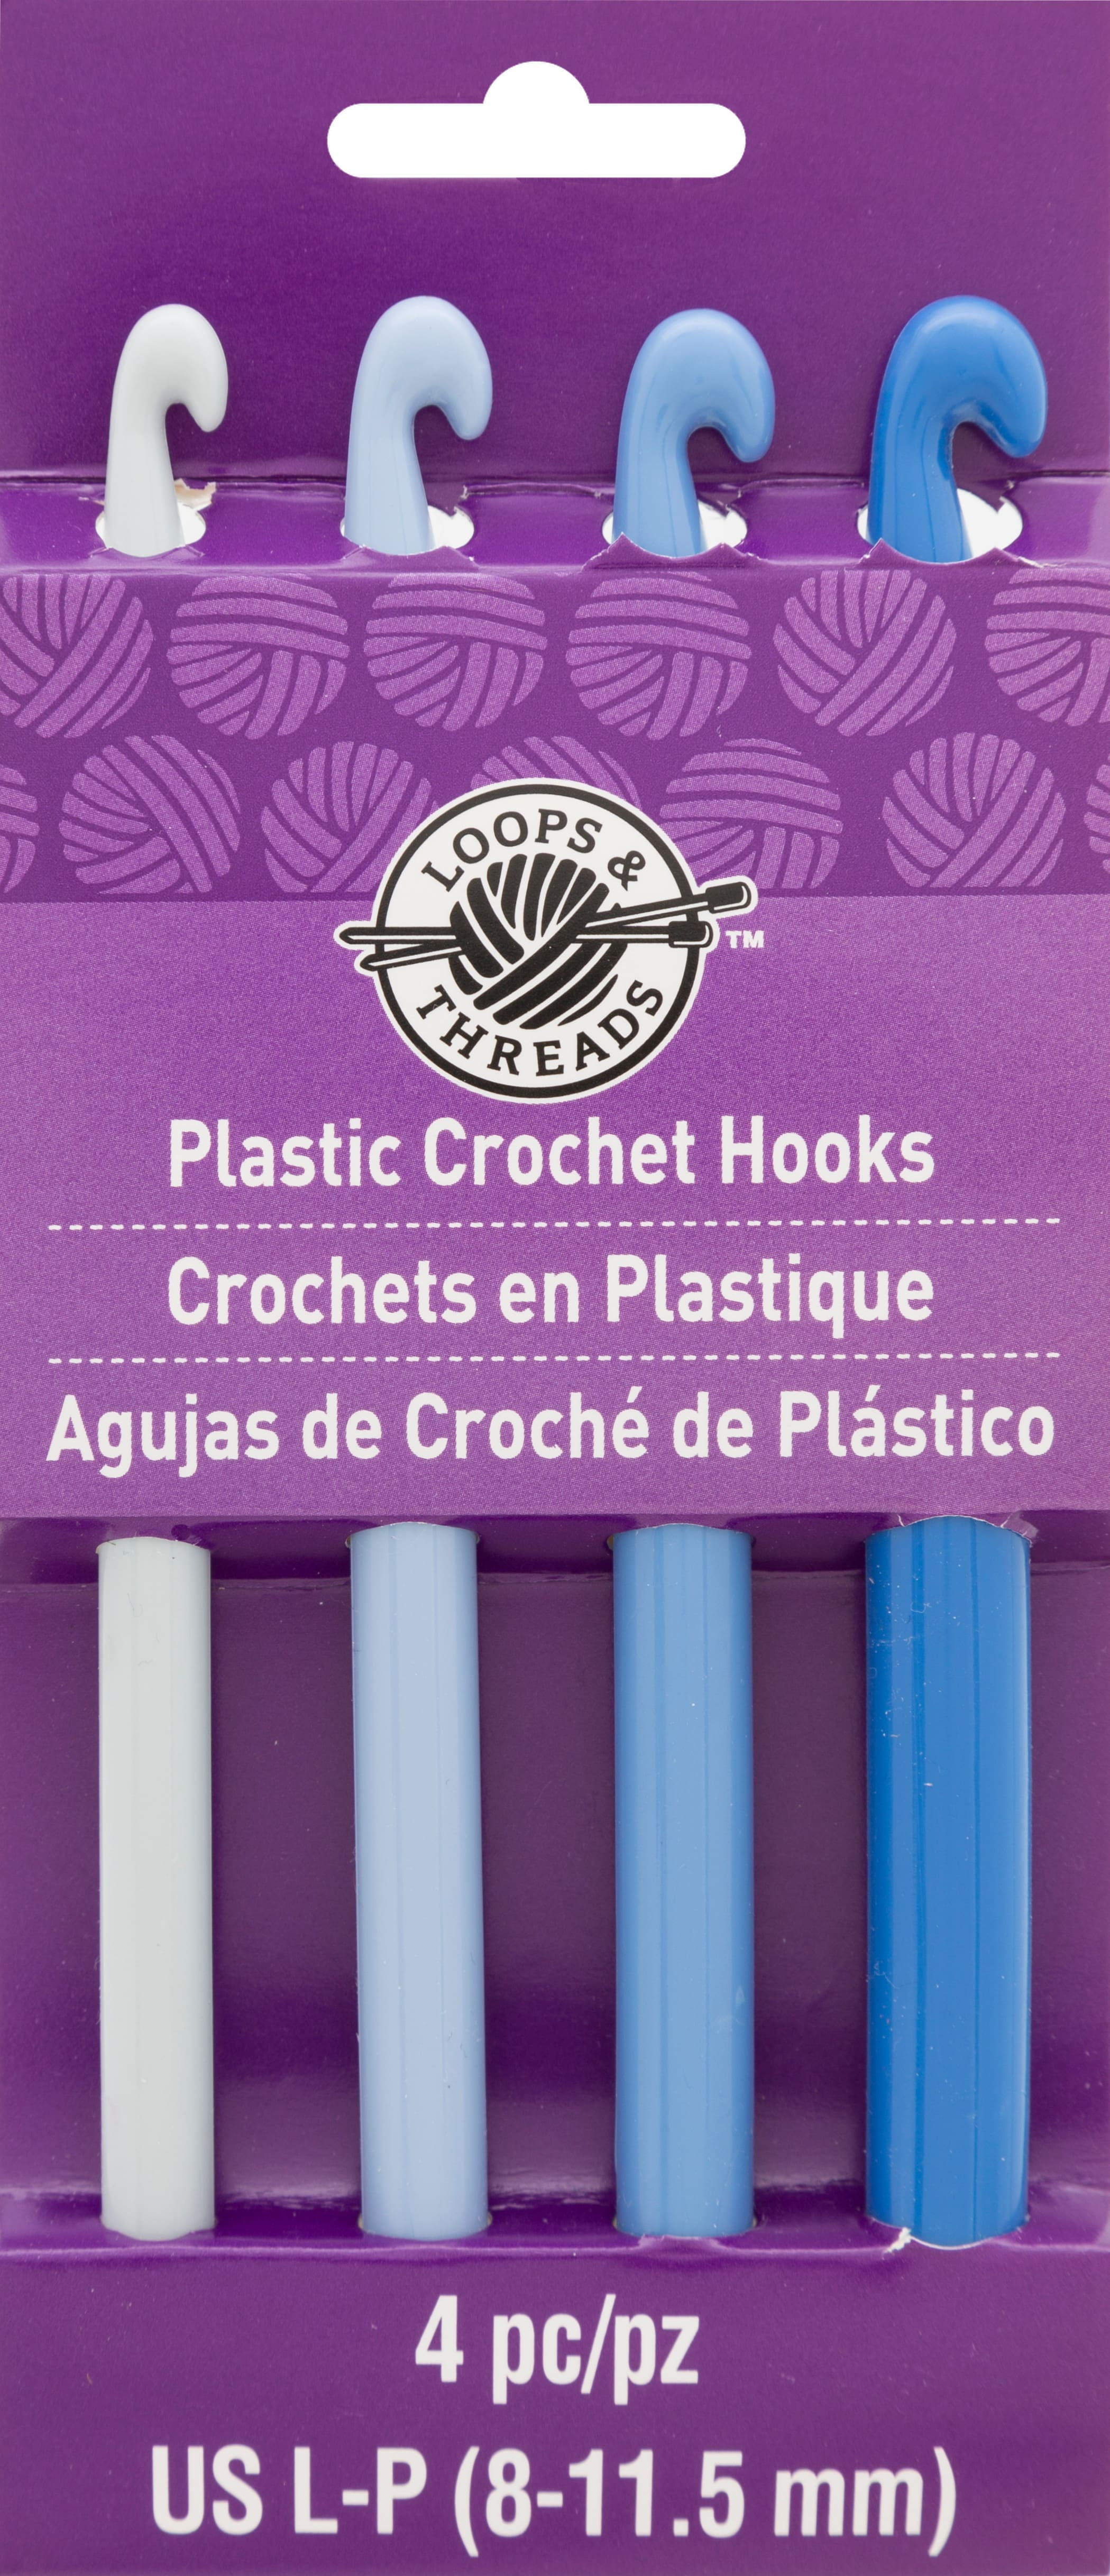 Plastic Crochet Hook Set by Loops & Threads®, L-P 